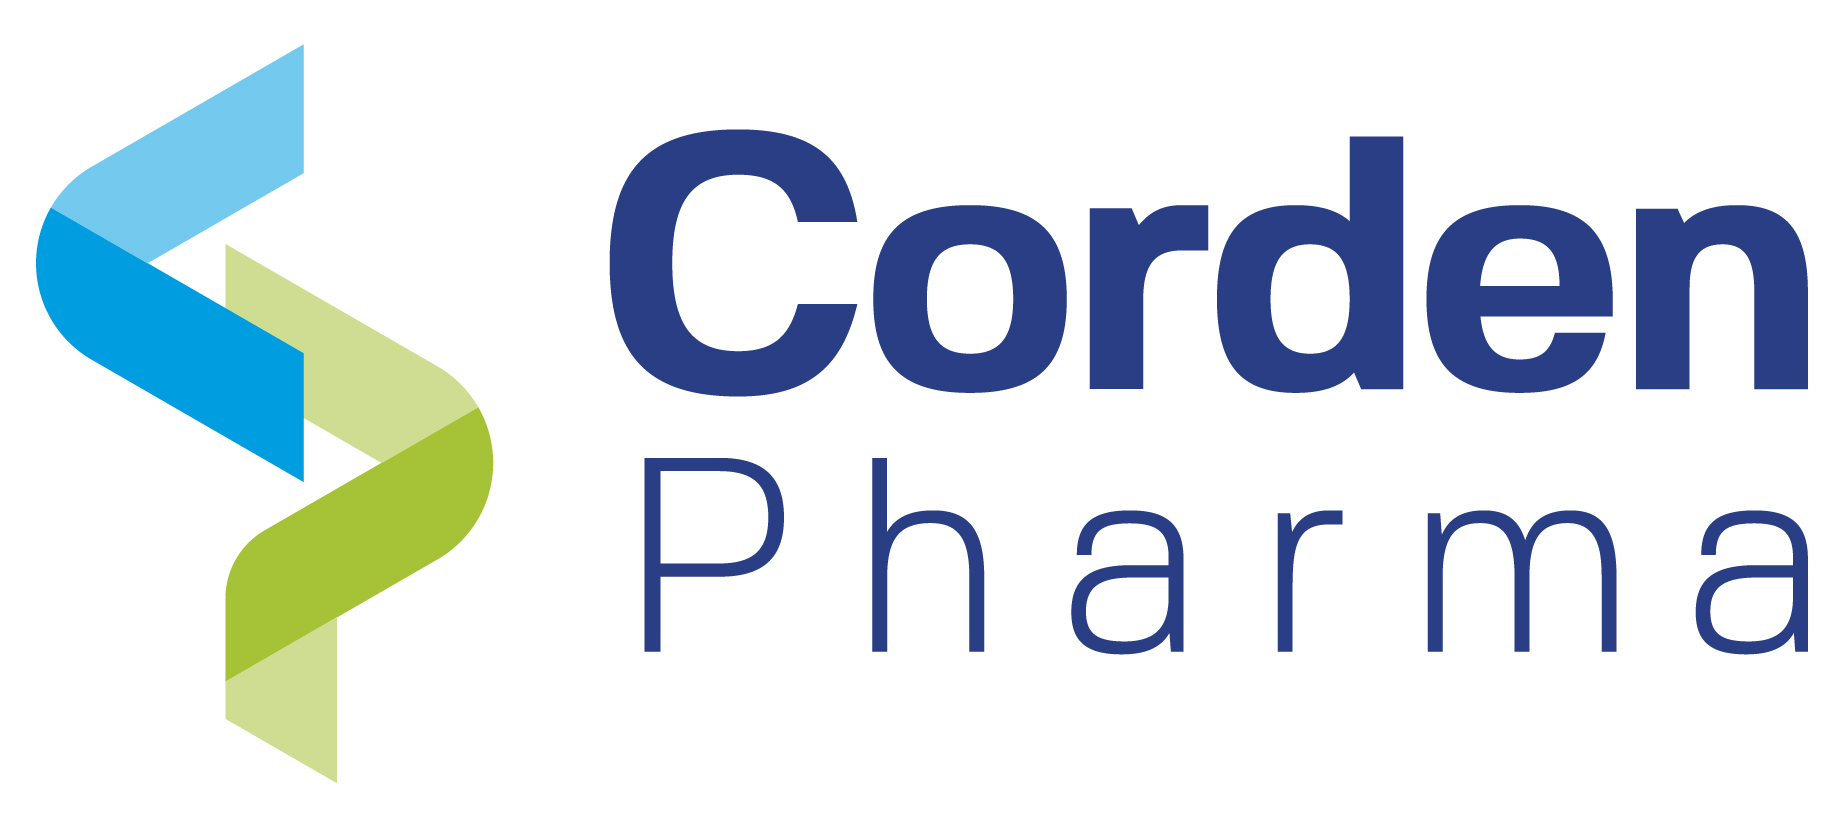 Corden Pharma Logo - Horizontal - Full Colour - RGB-01